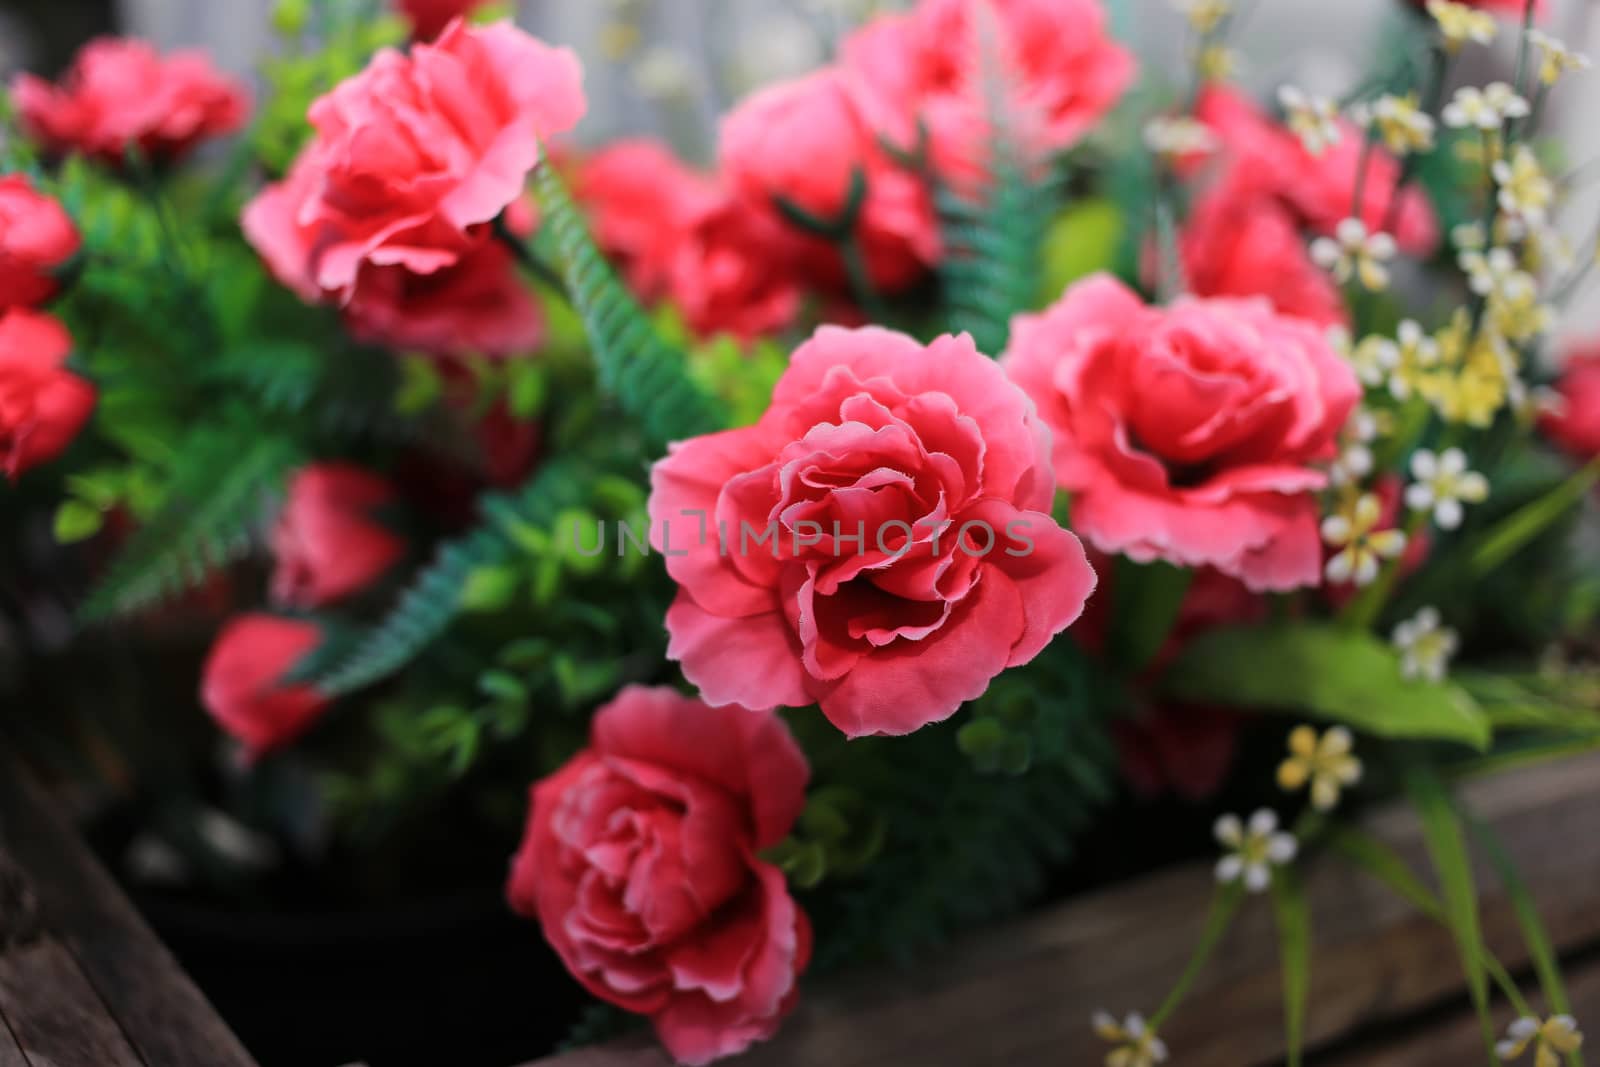 Red Artificial Rose flower in basket